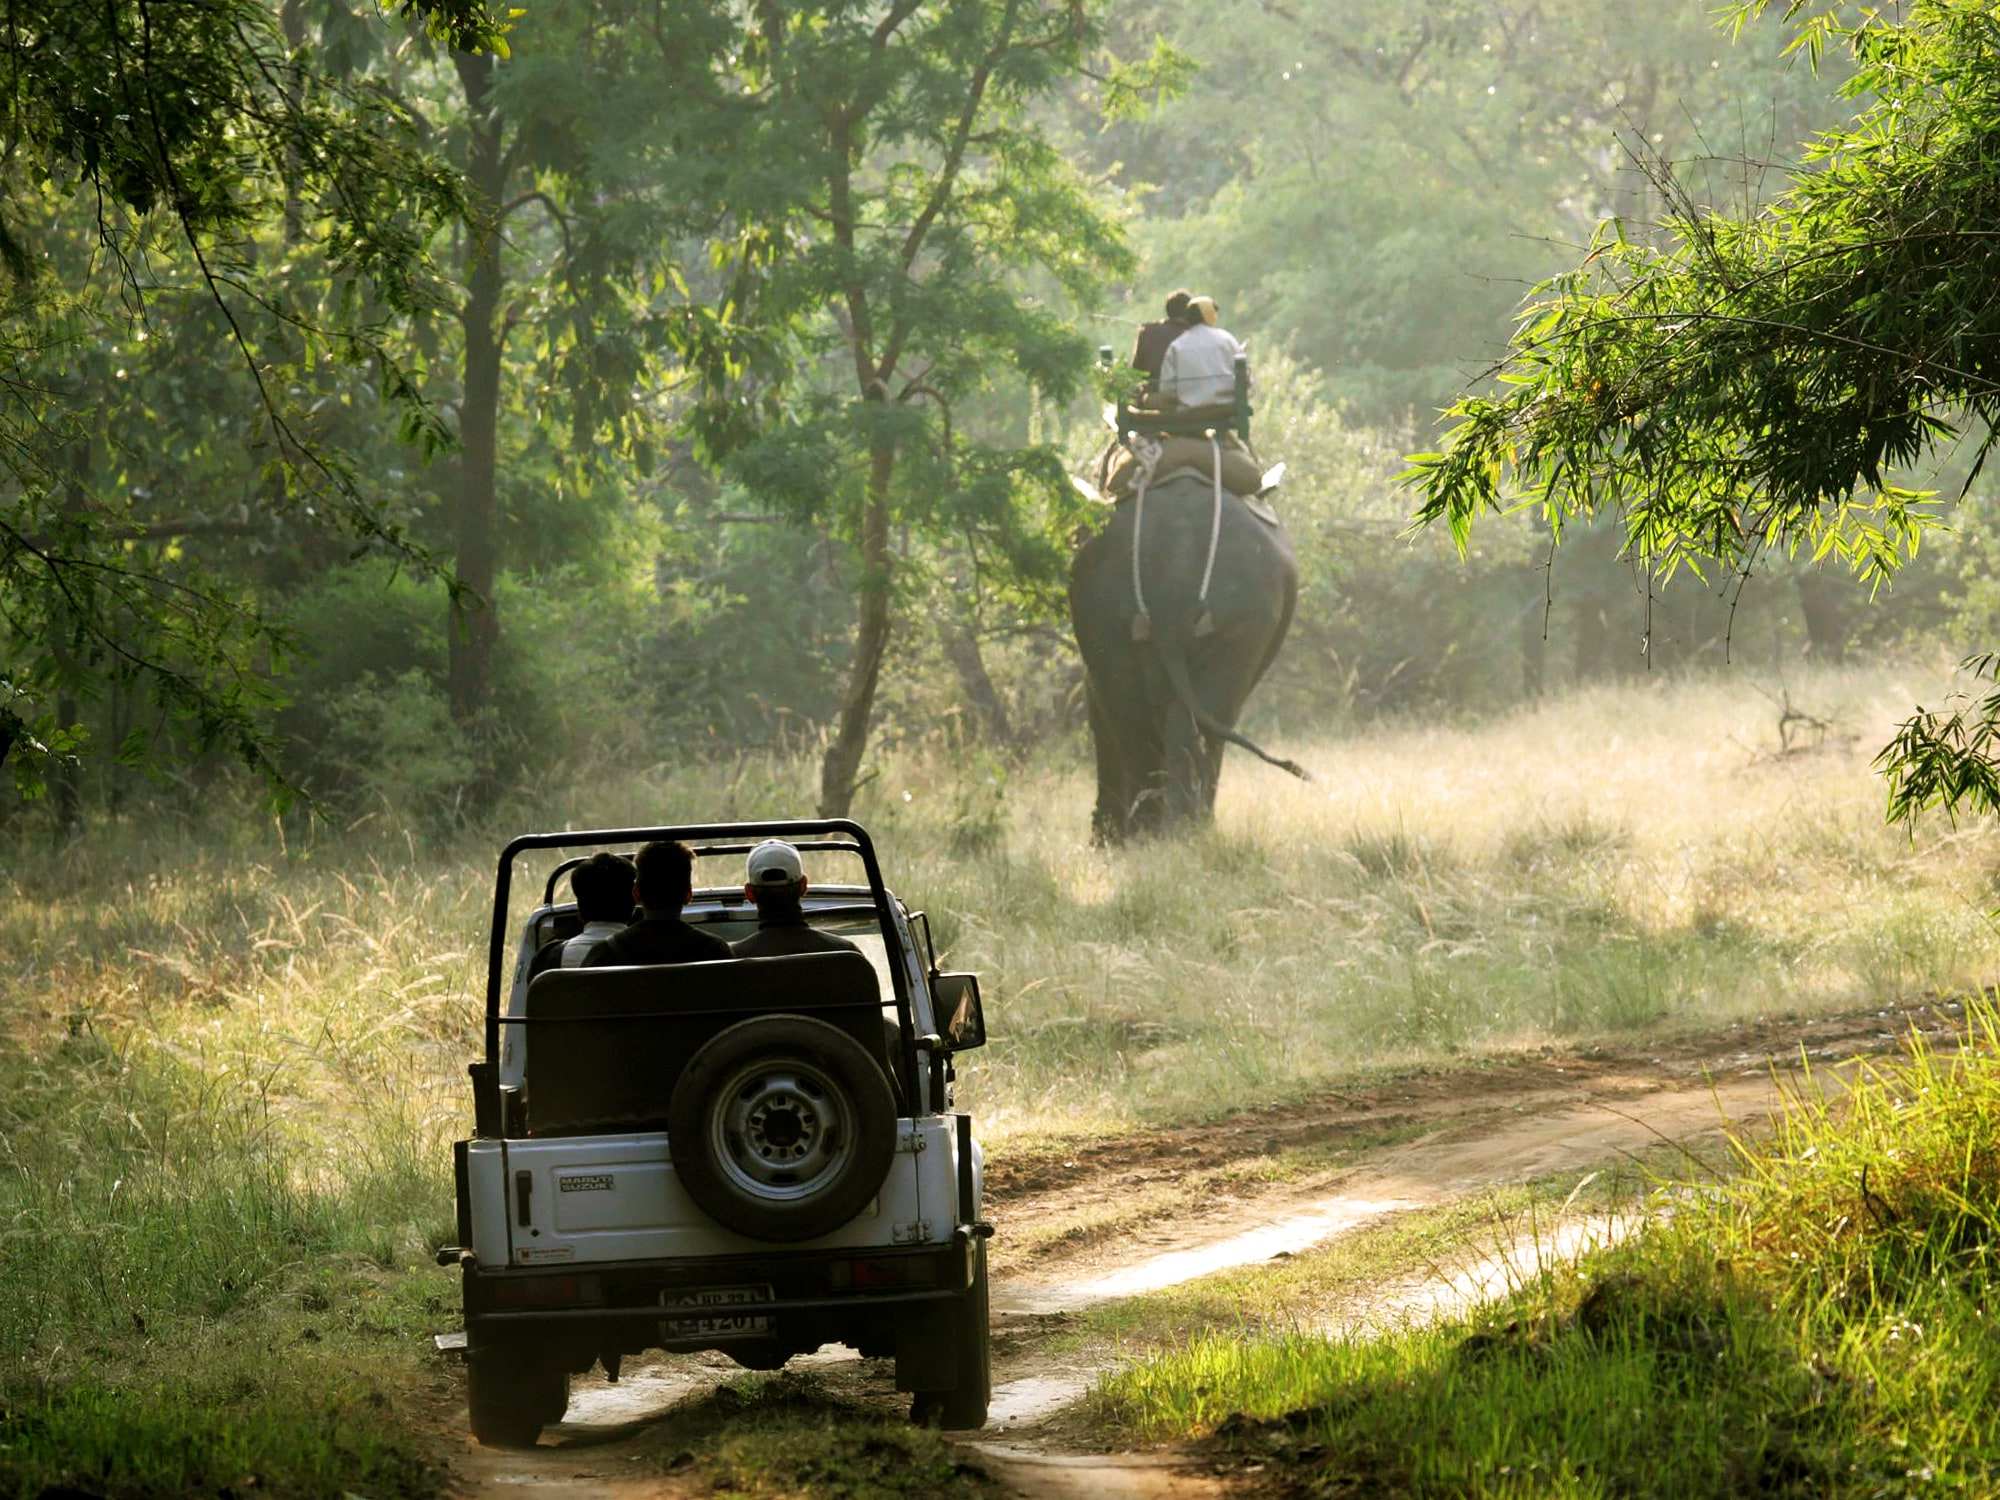 jungle safari india delhi